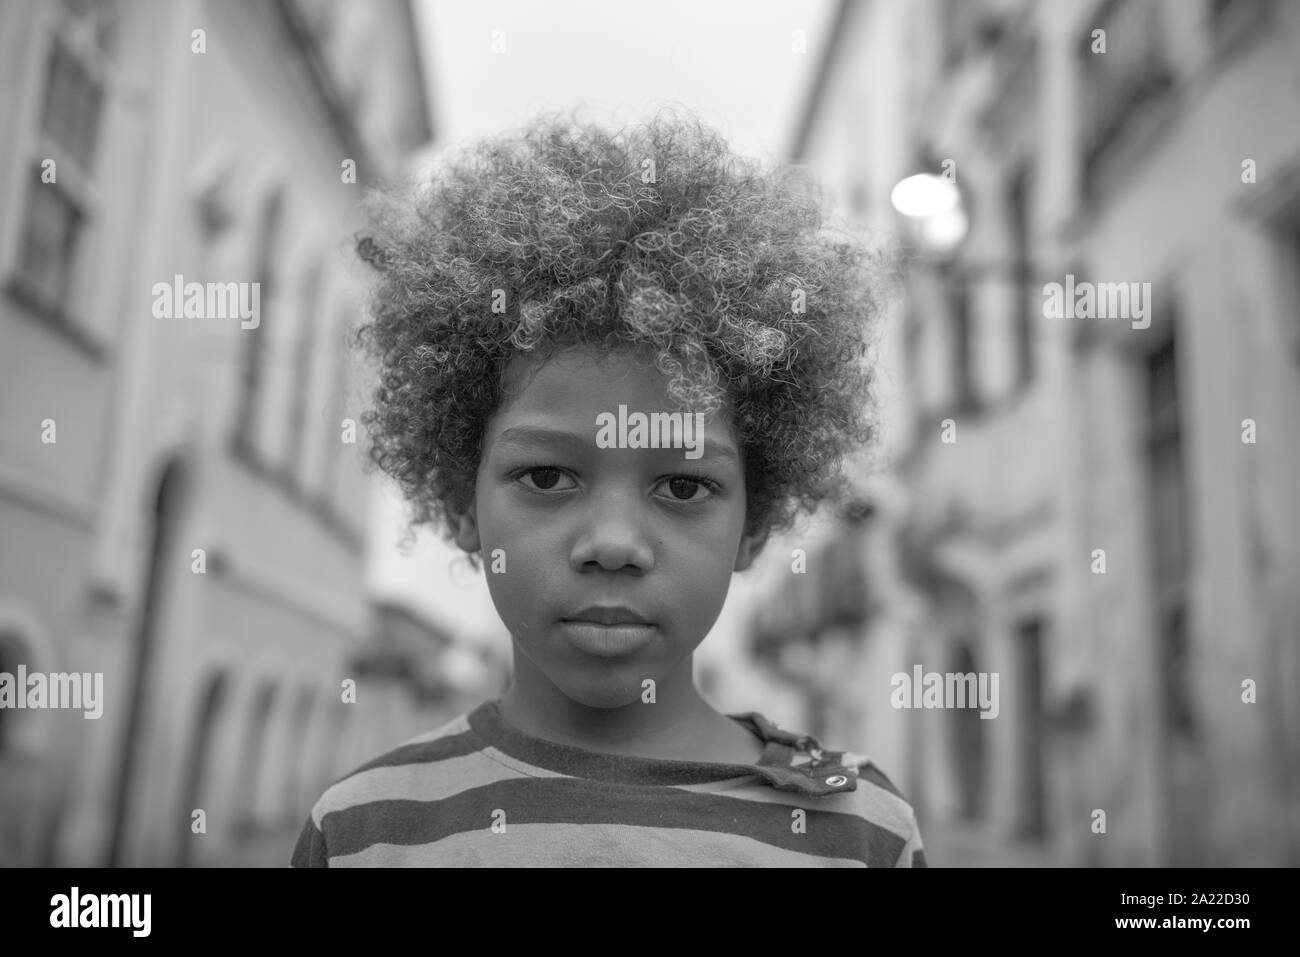 Brazilian street children Black and White Stock Photos & Images - Alamy